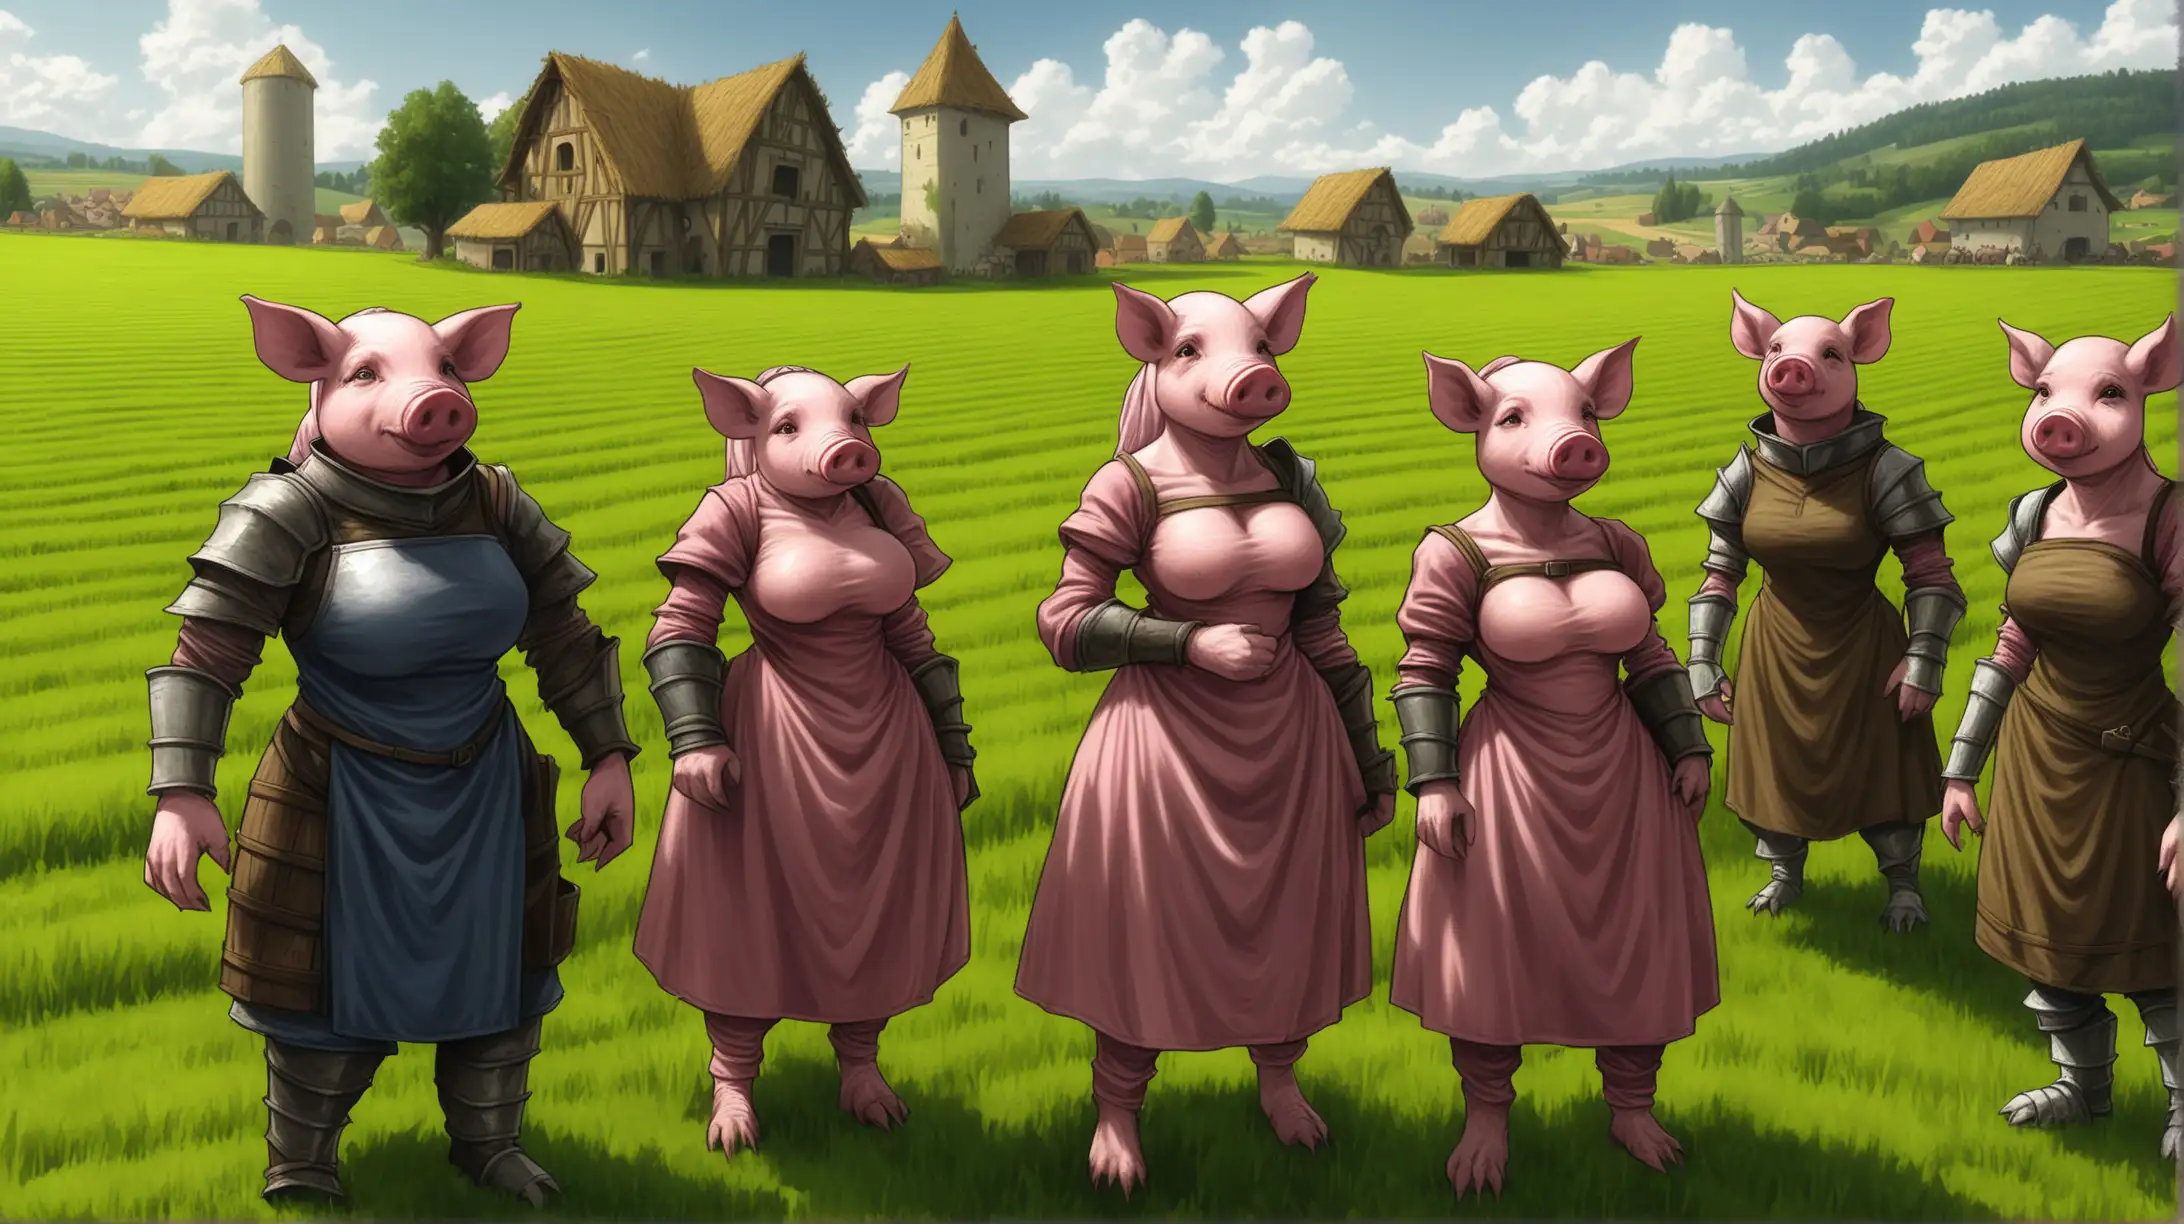 Hybrid Pig and Boar People in Medieval Fantasy Farmland